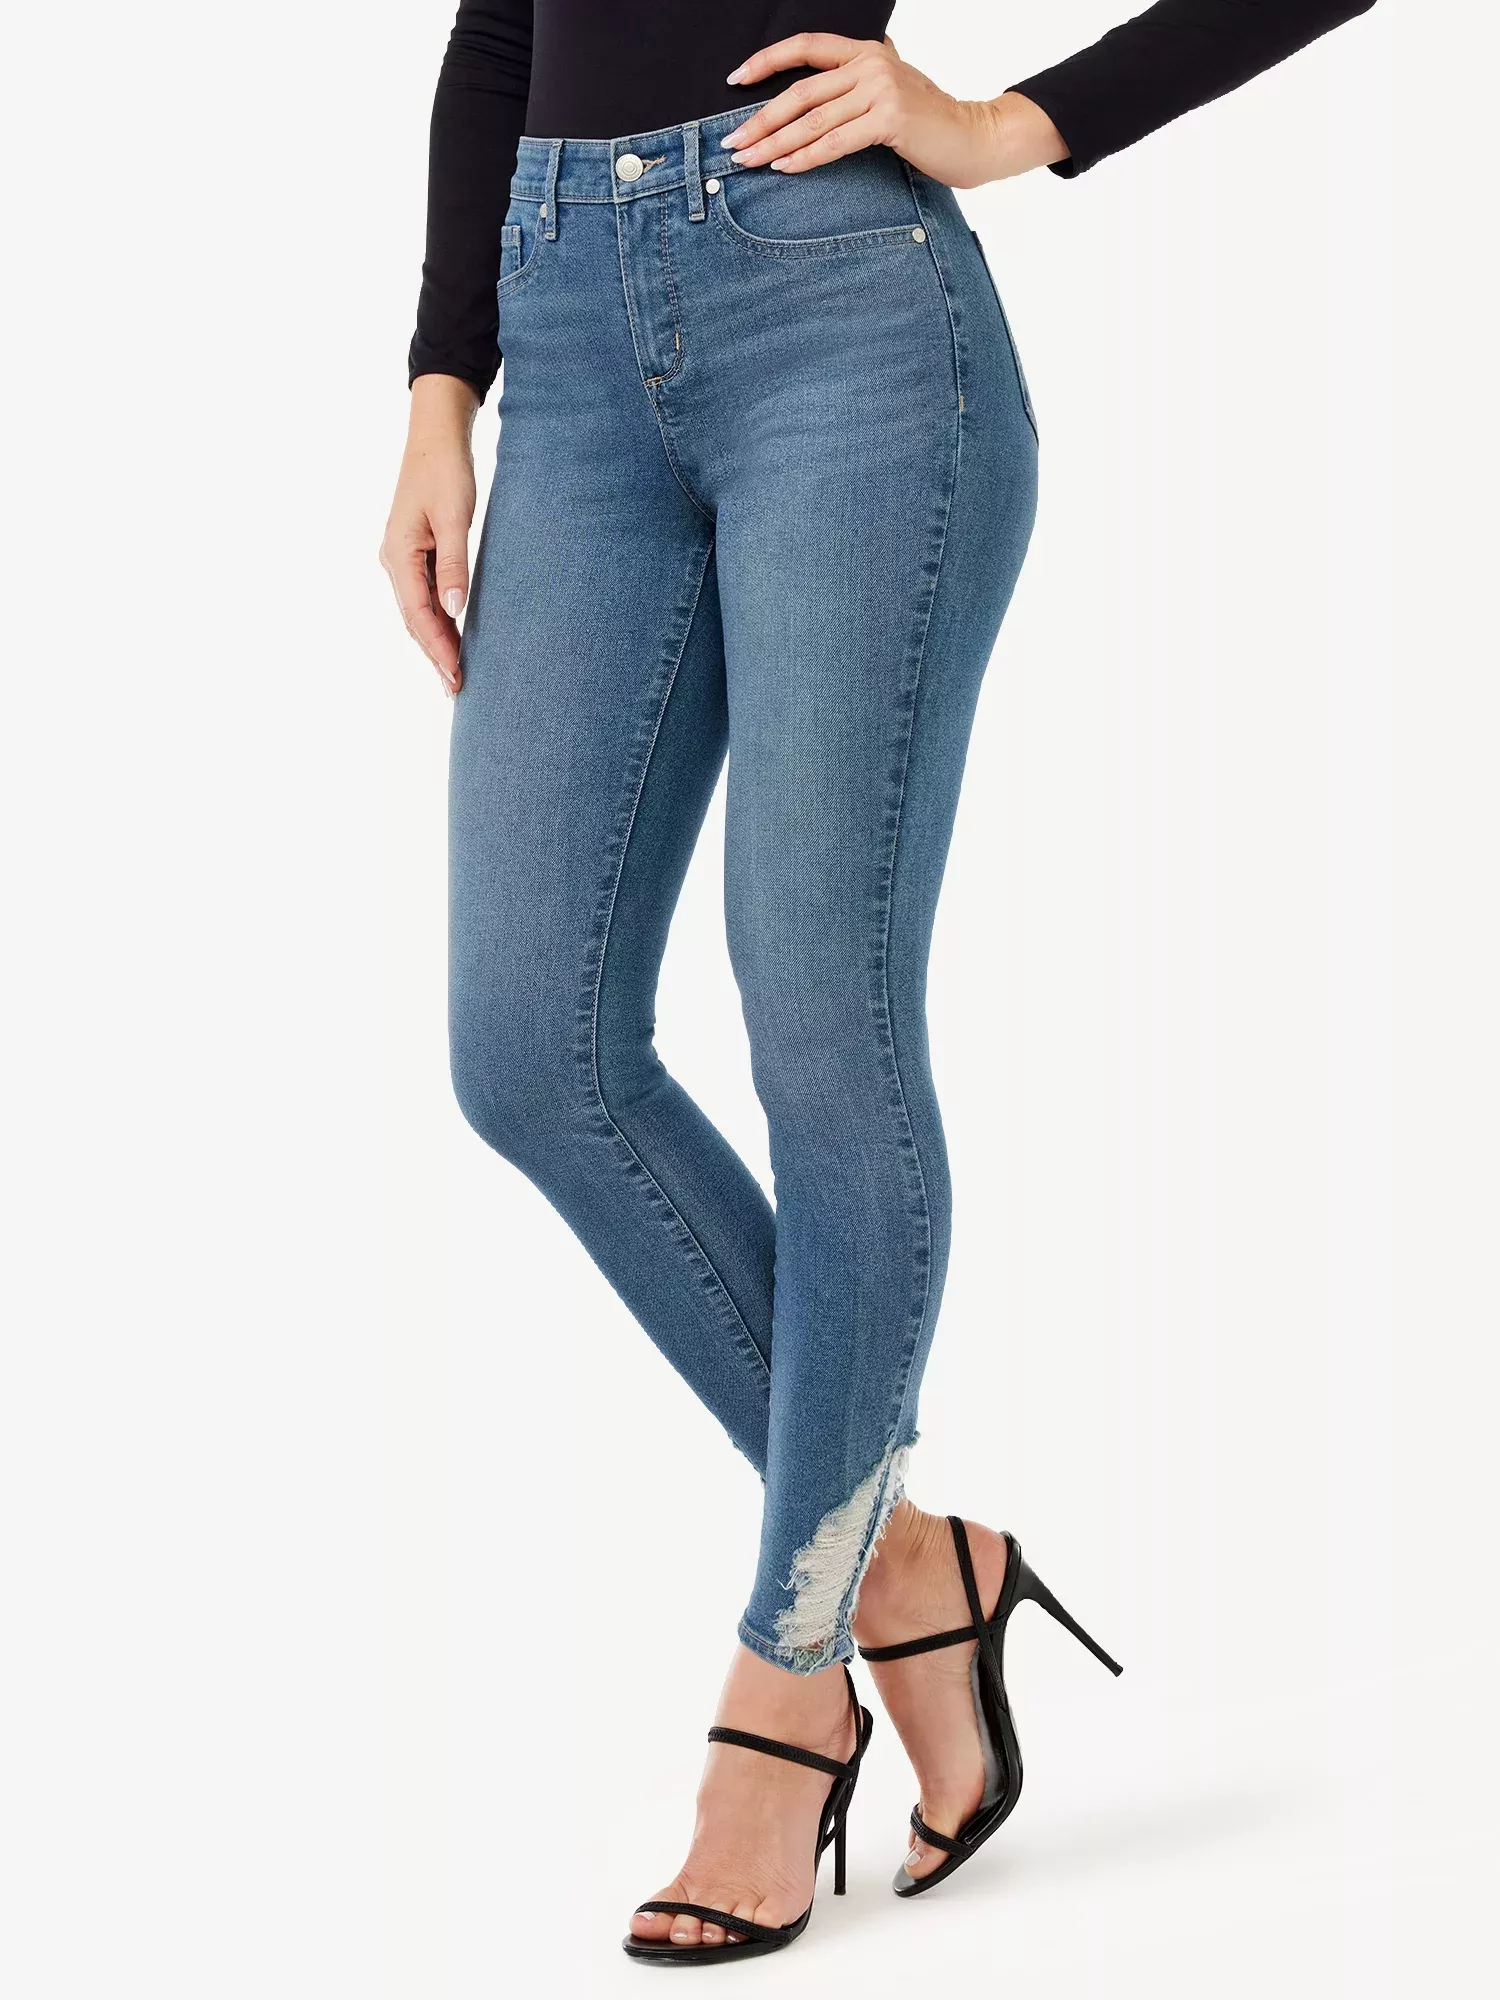 Sofia Jeans by Sofia Vergara Women's Scoop Neck Long Sleeve